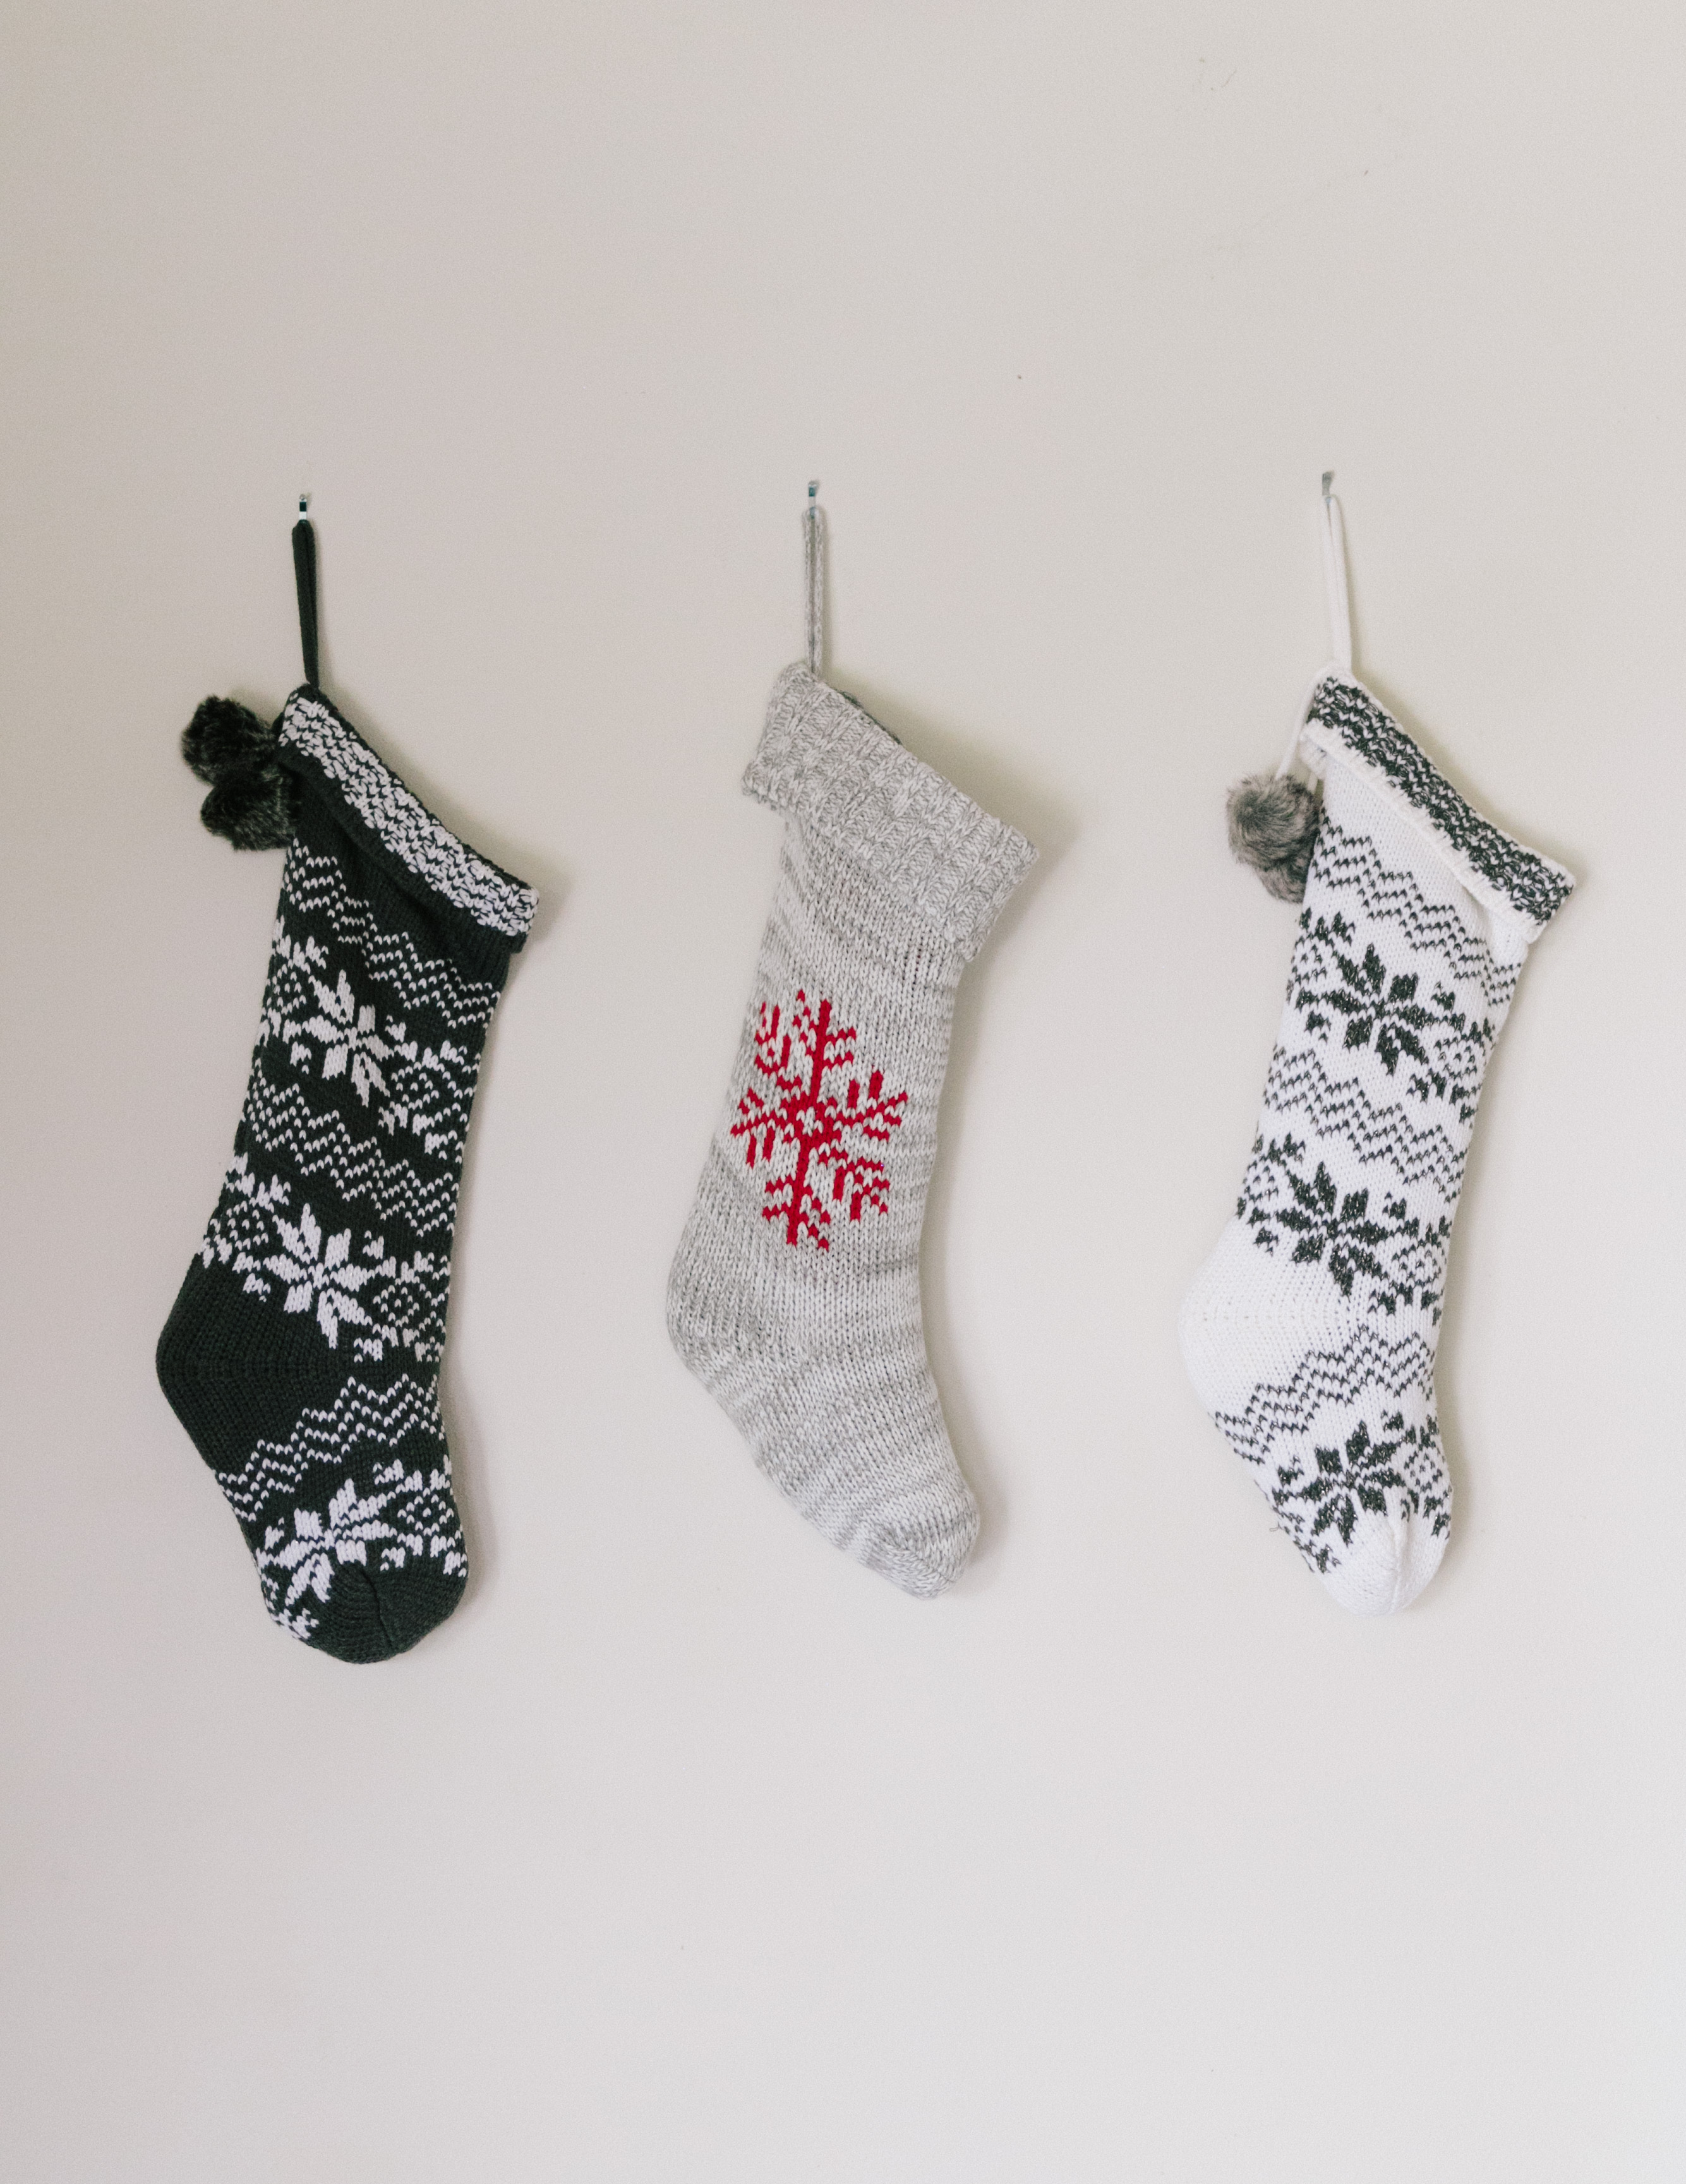 Target Stockings | Knitted Stockings | Vintage-Inspired Christmas Decor | elanaloo.com